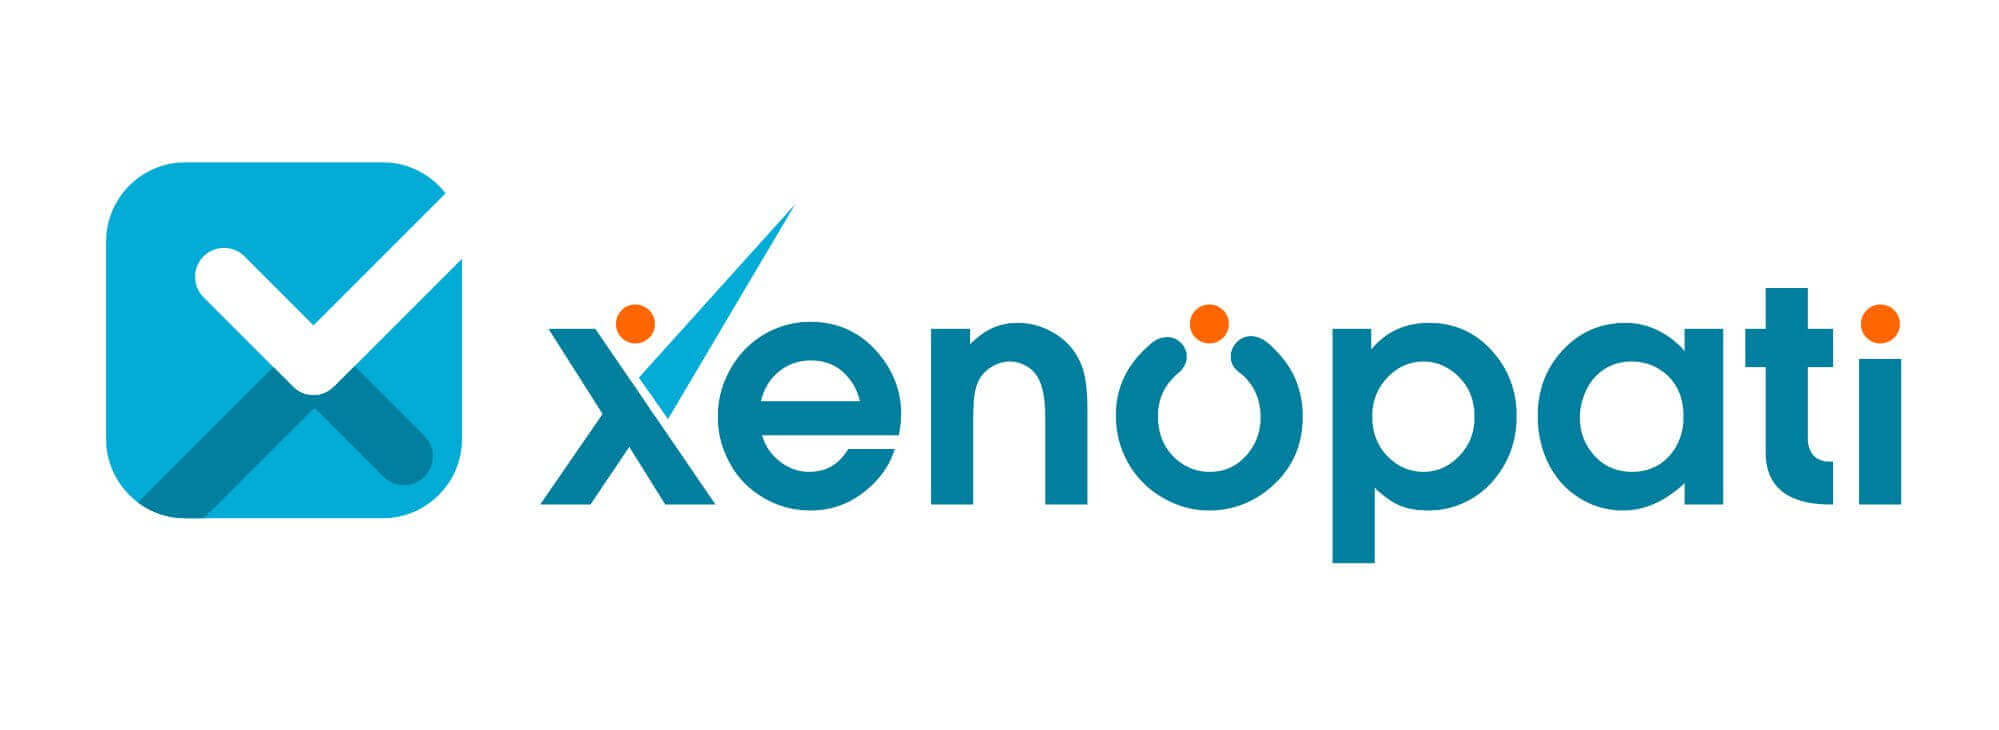 XENOPATI.ID :: Digital transformation partner for business growth